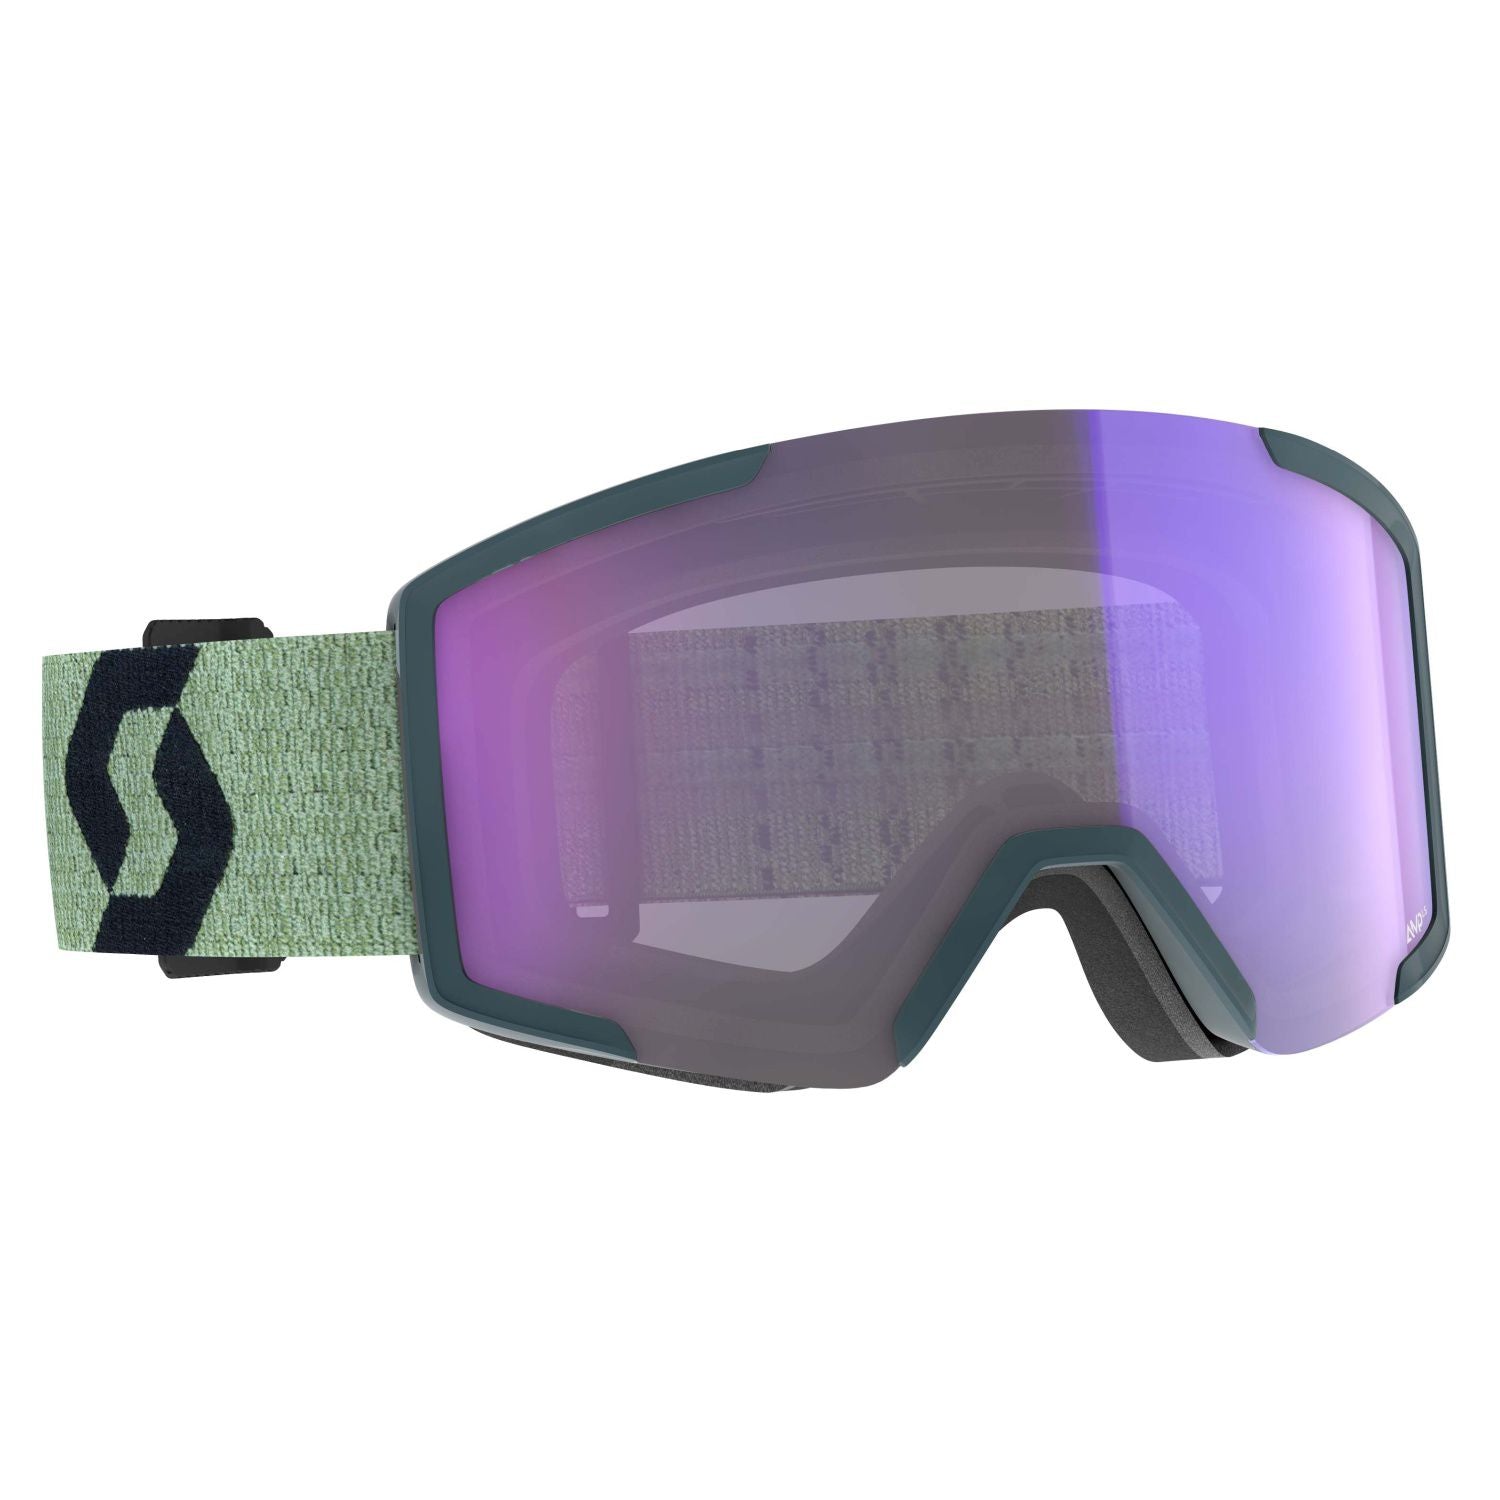 Gafas de esquí - Fotocromáticas, Comprar barato